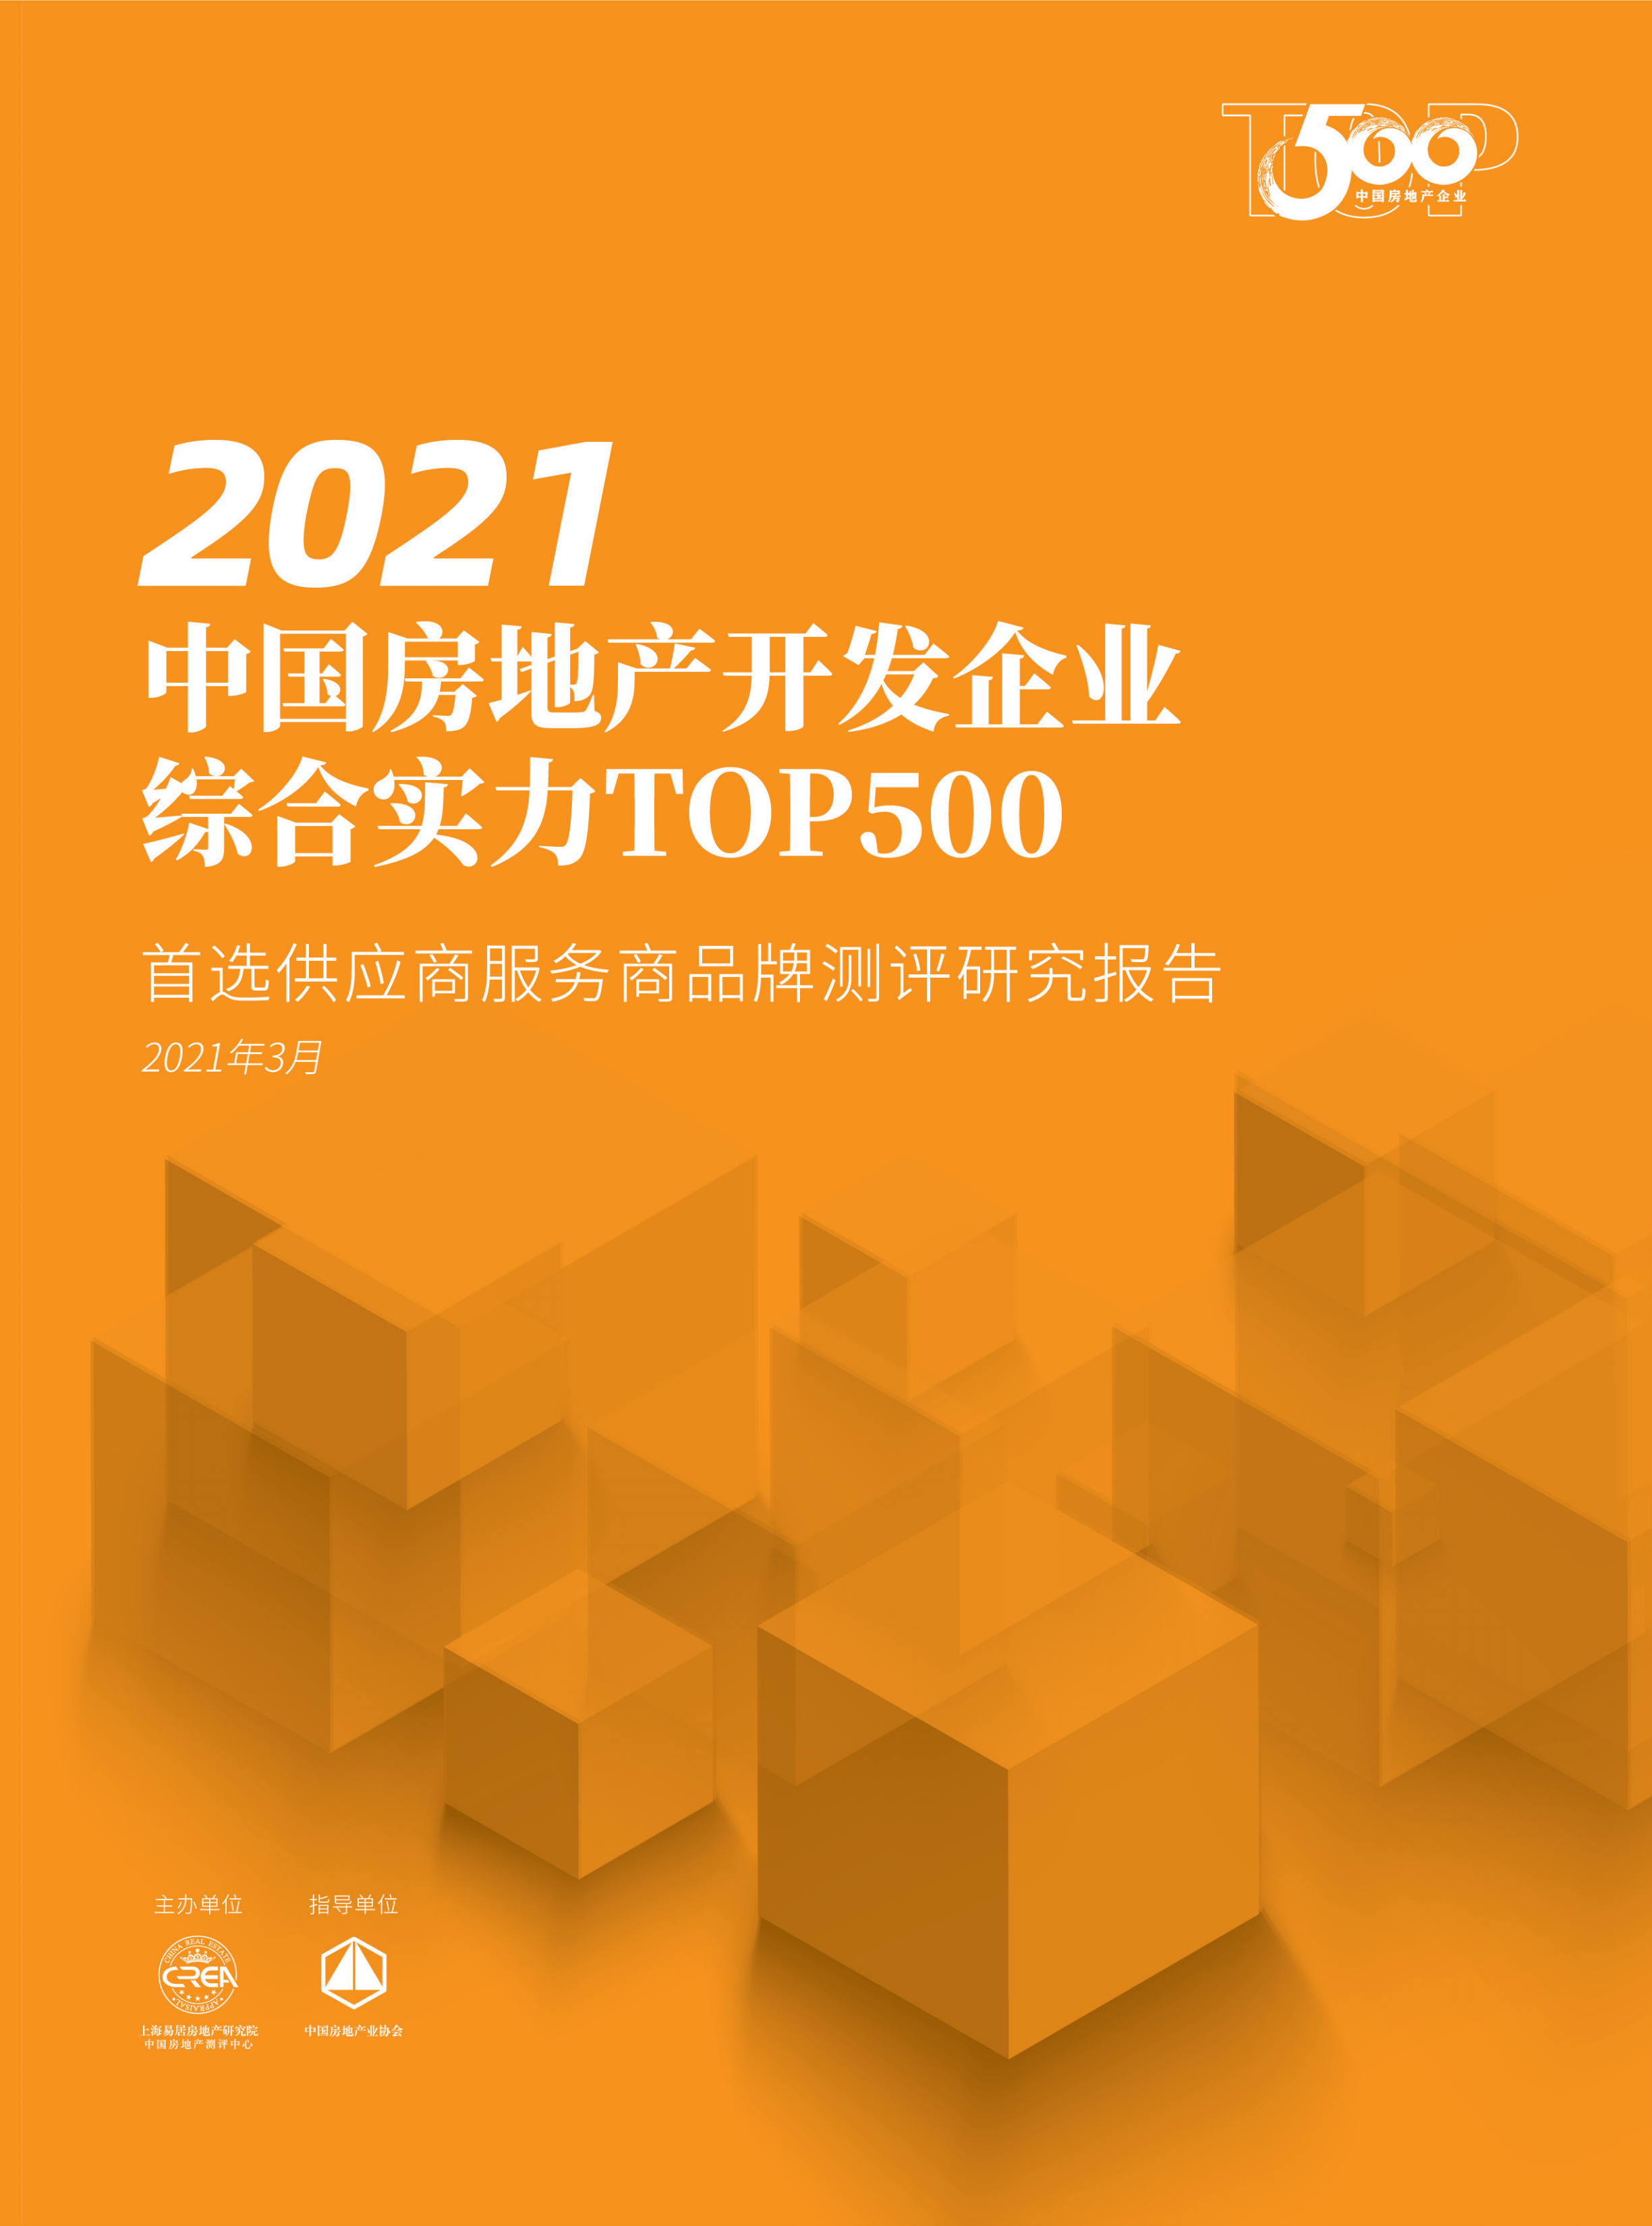 xiazai|2021首选供应商服务商品测评研究报告